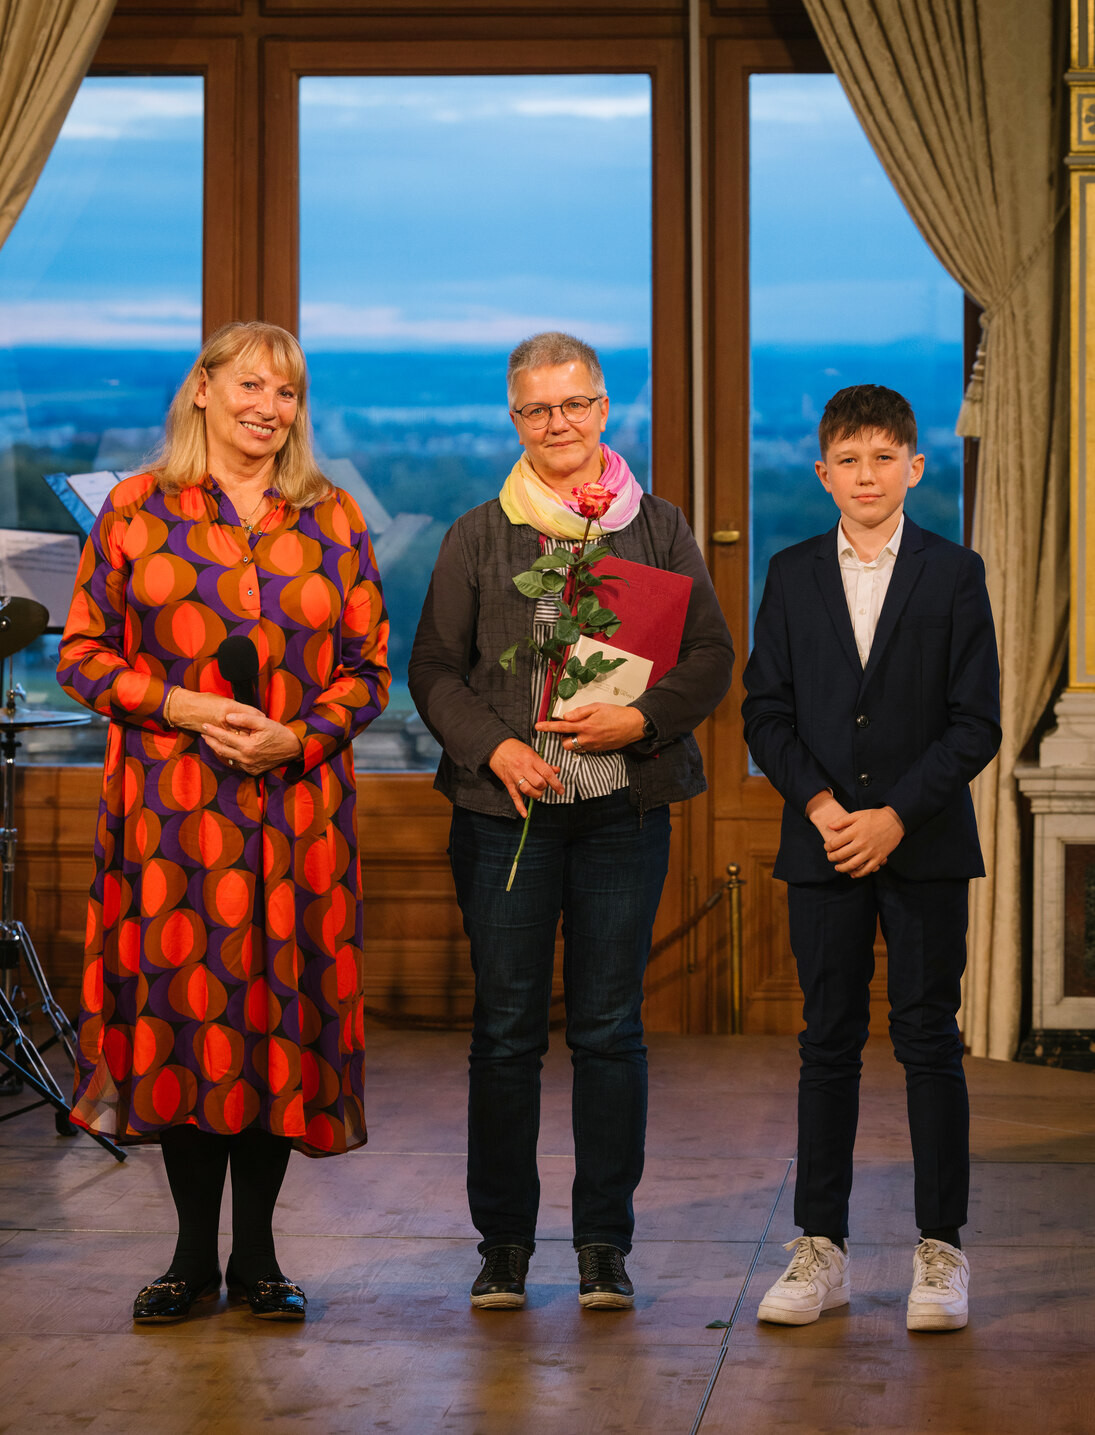 Staatsministerin Köpping mit Preisträgerin und Laudator